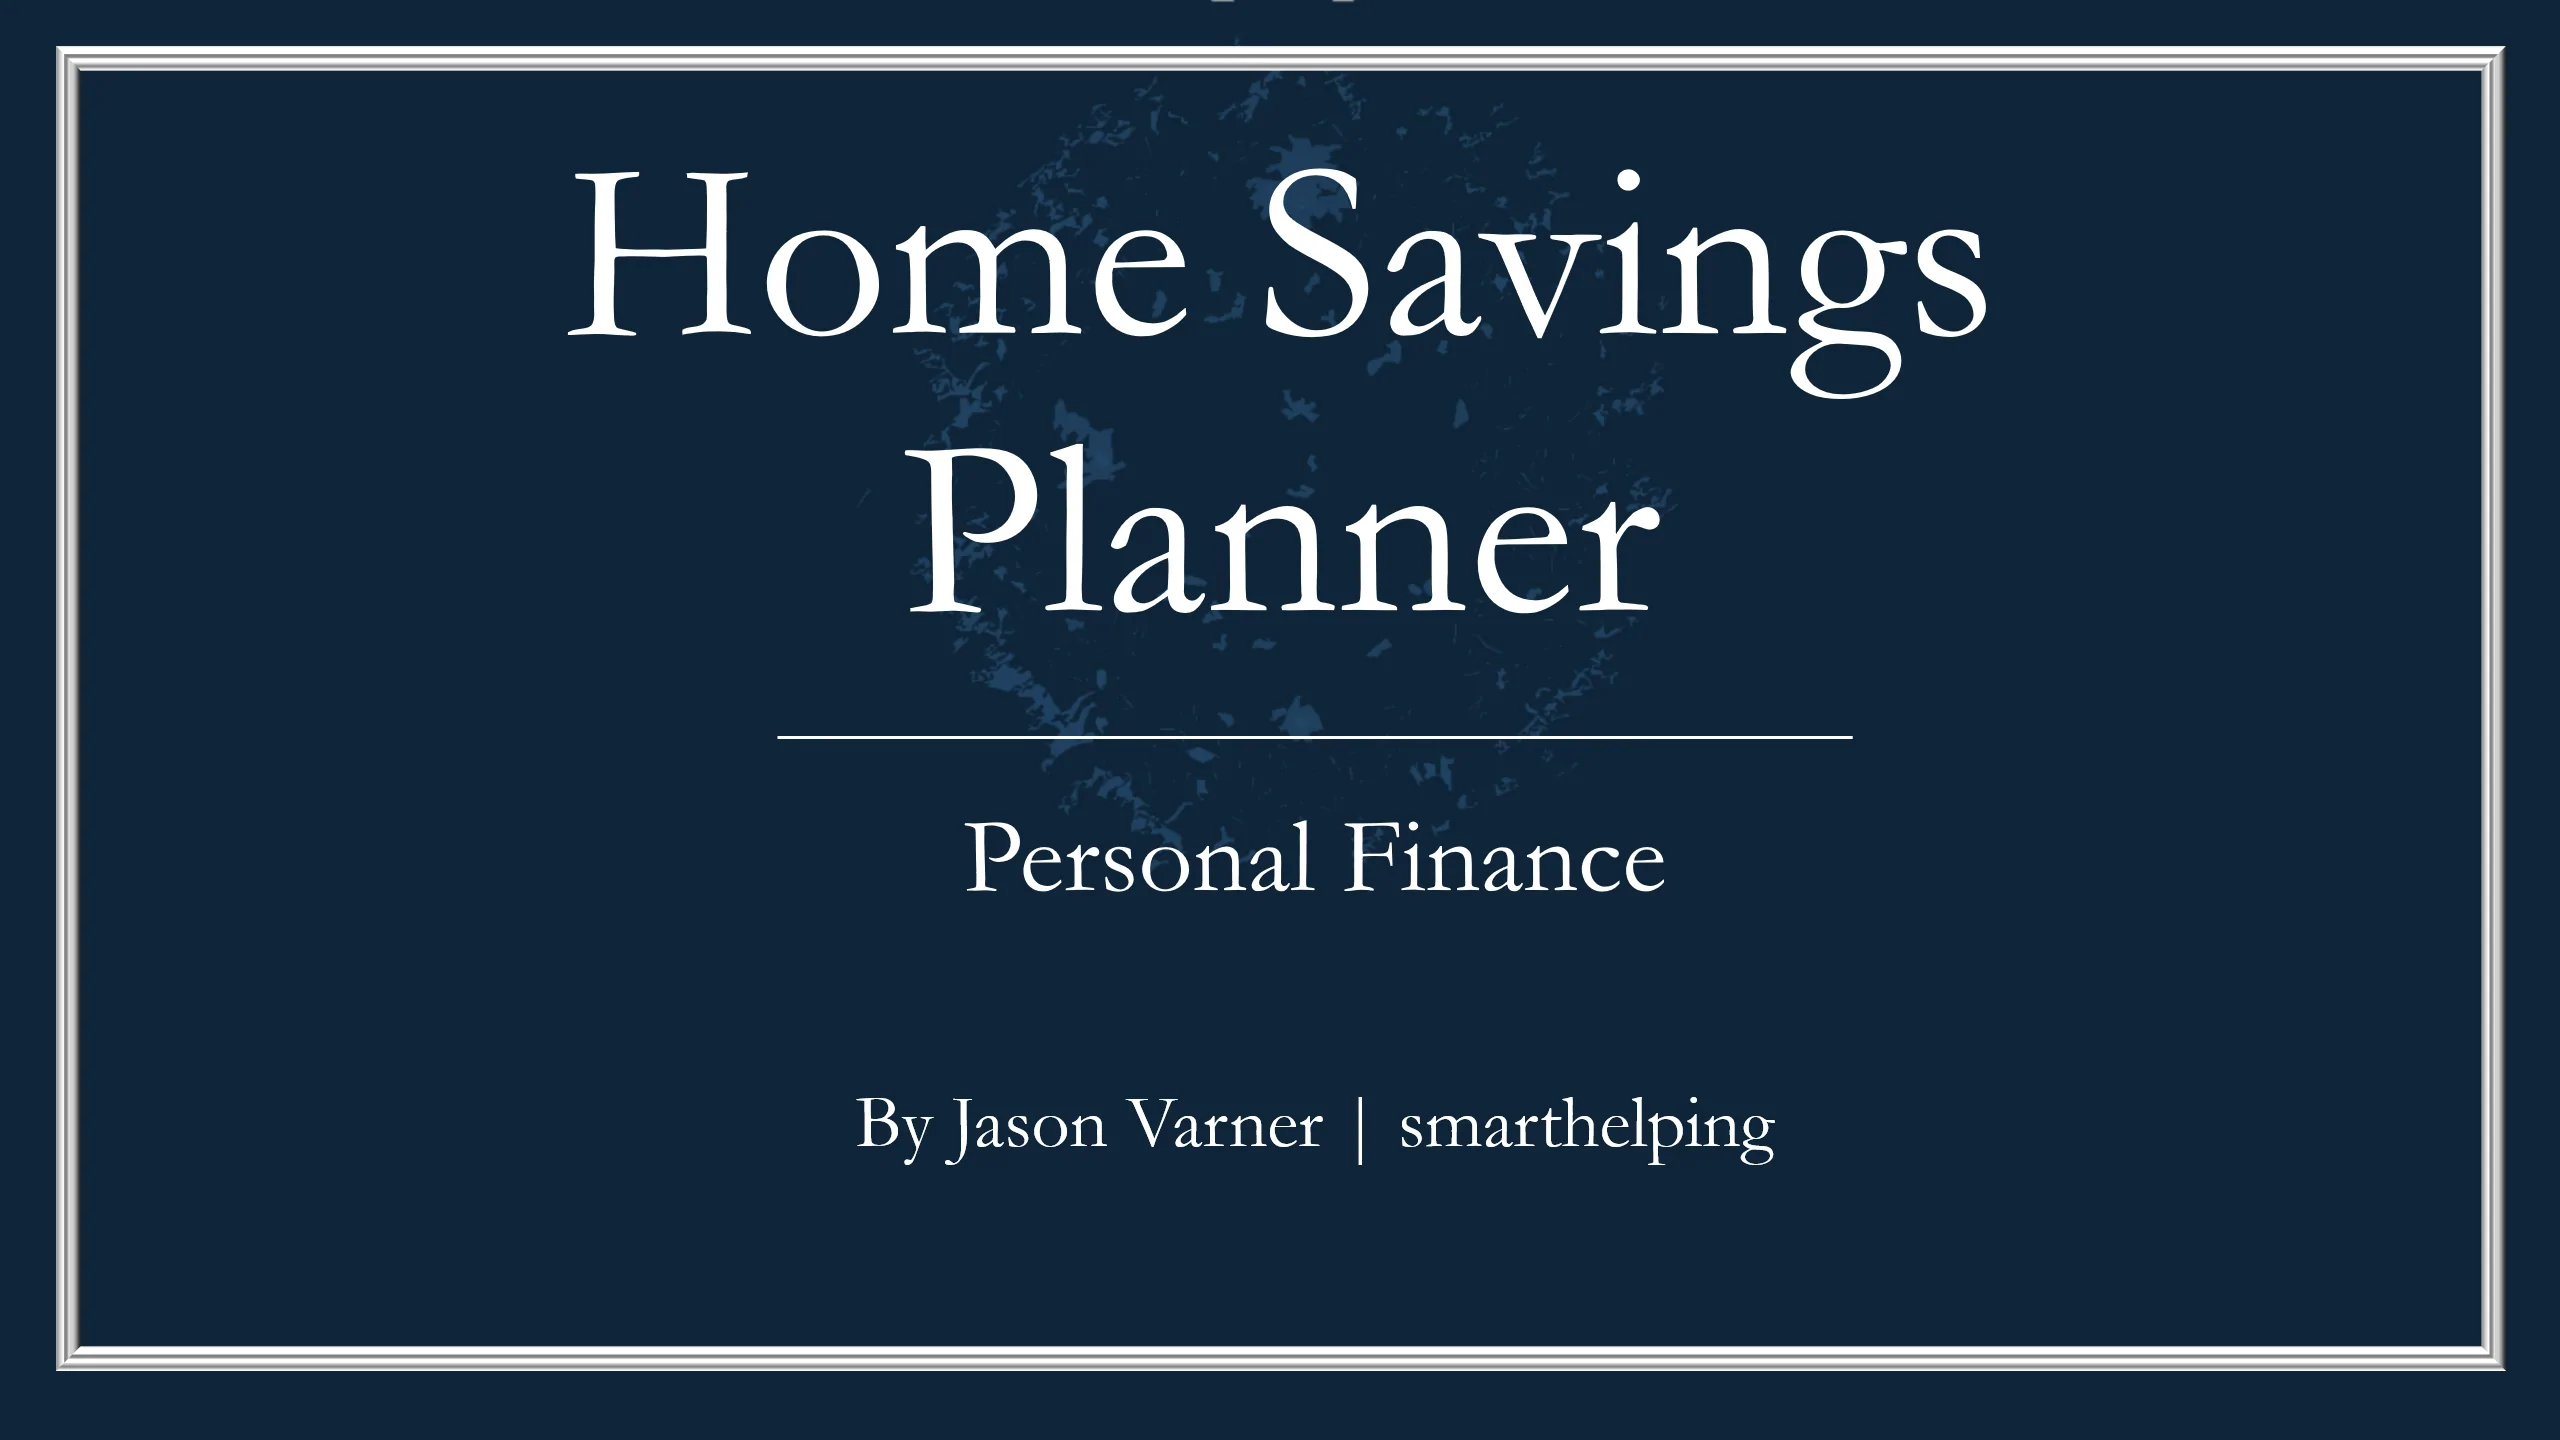 Home Savings Planner Template